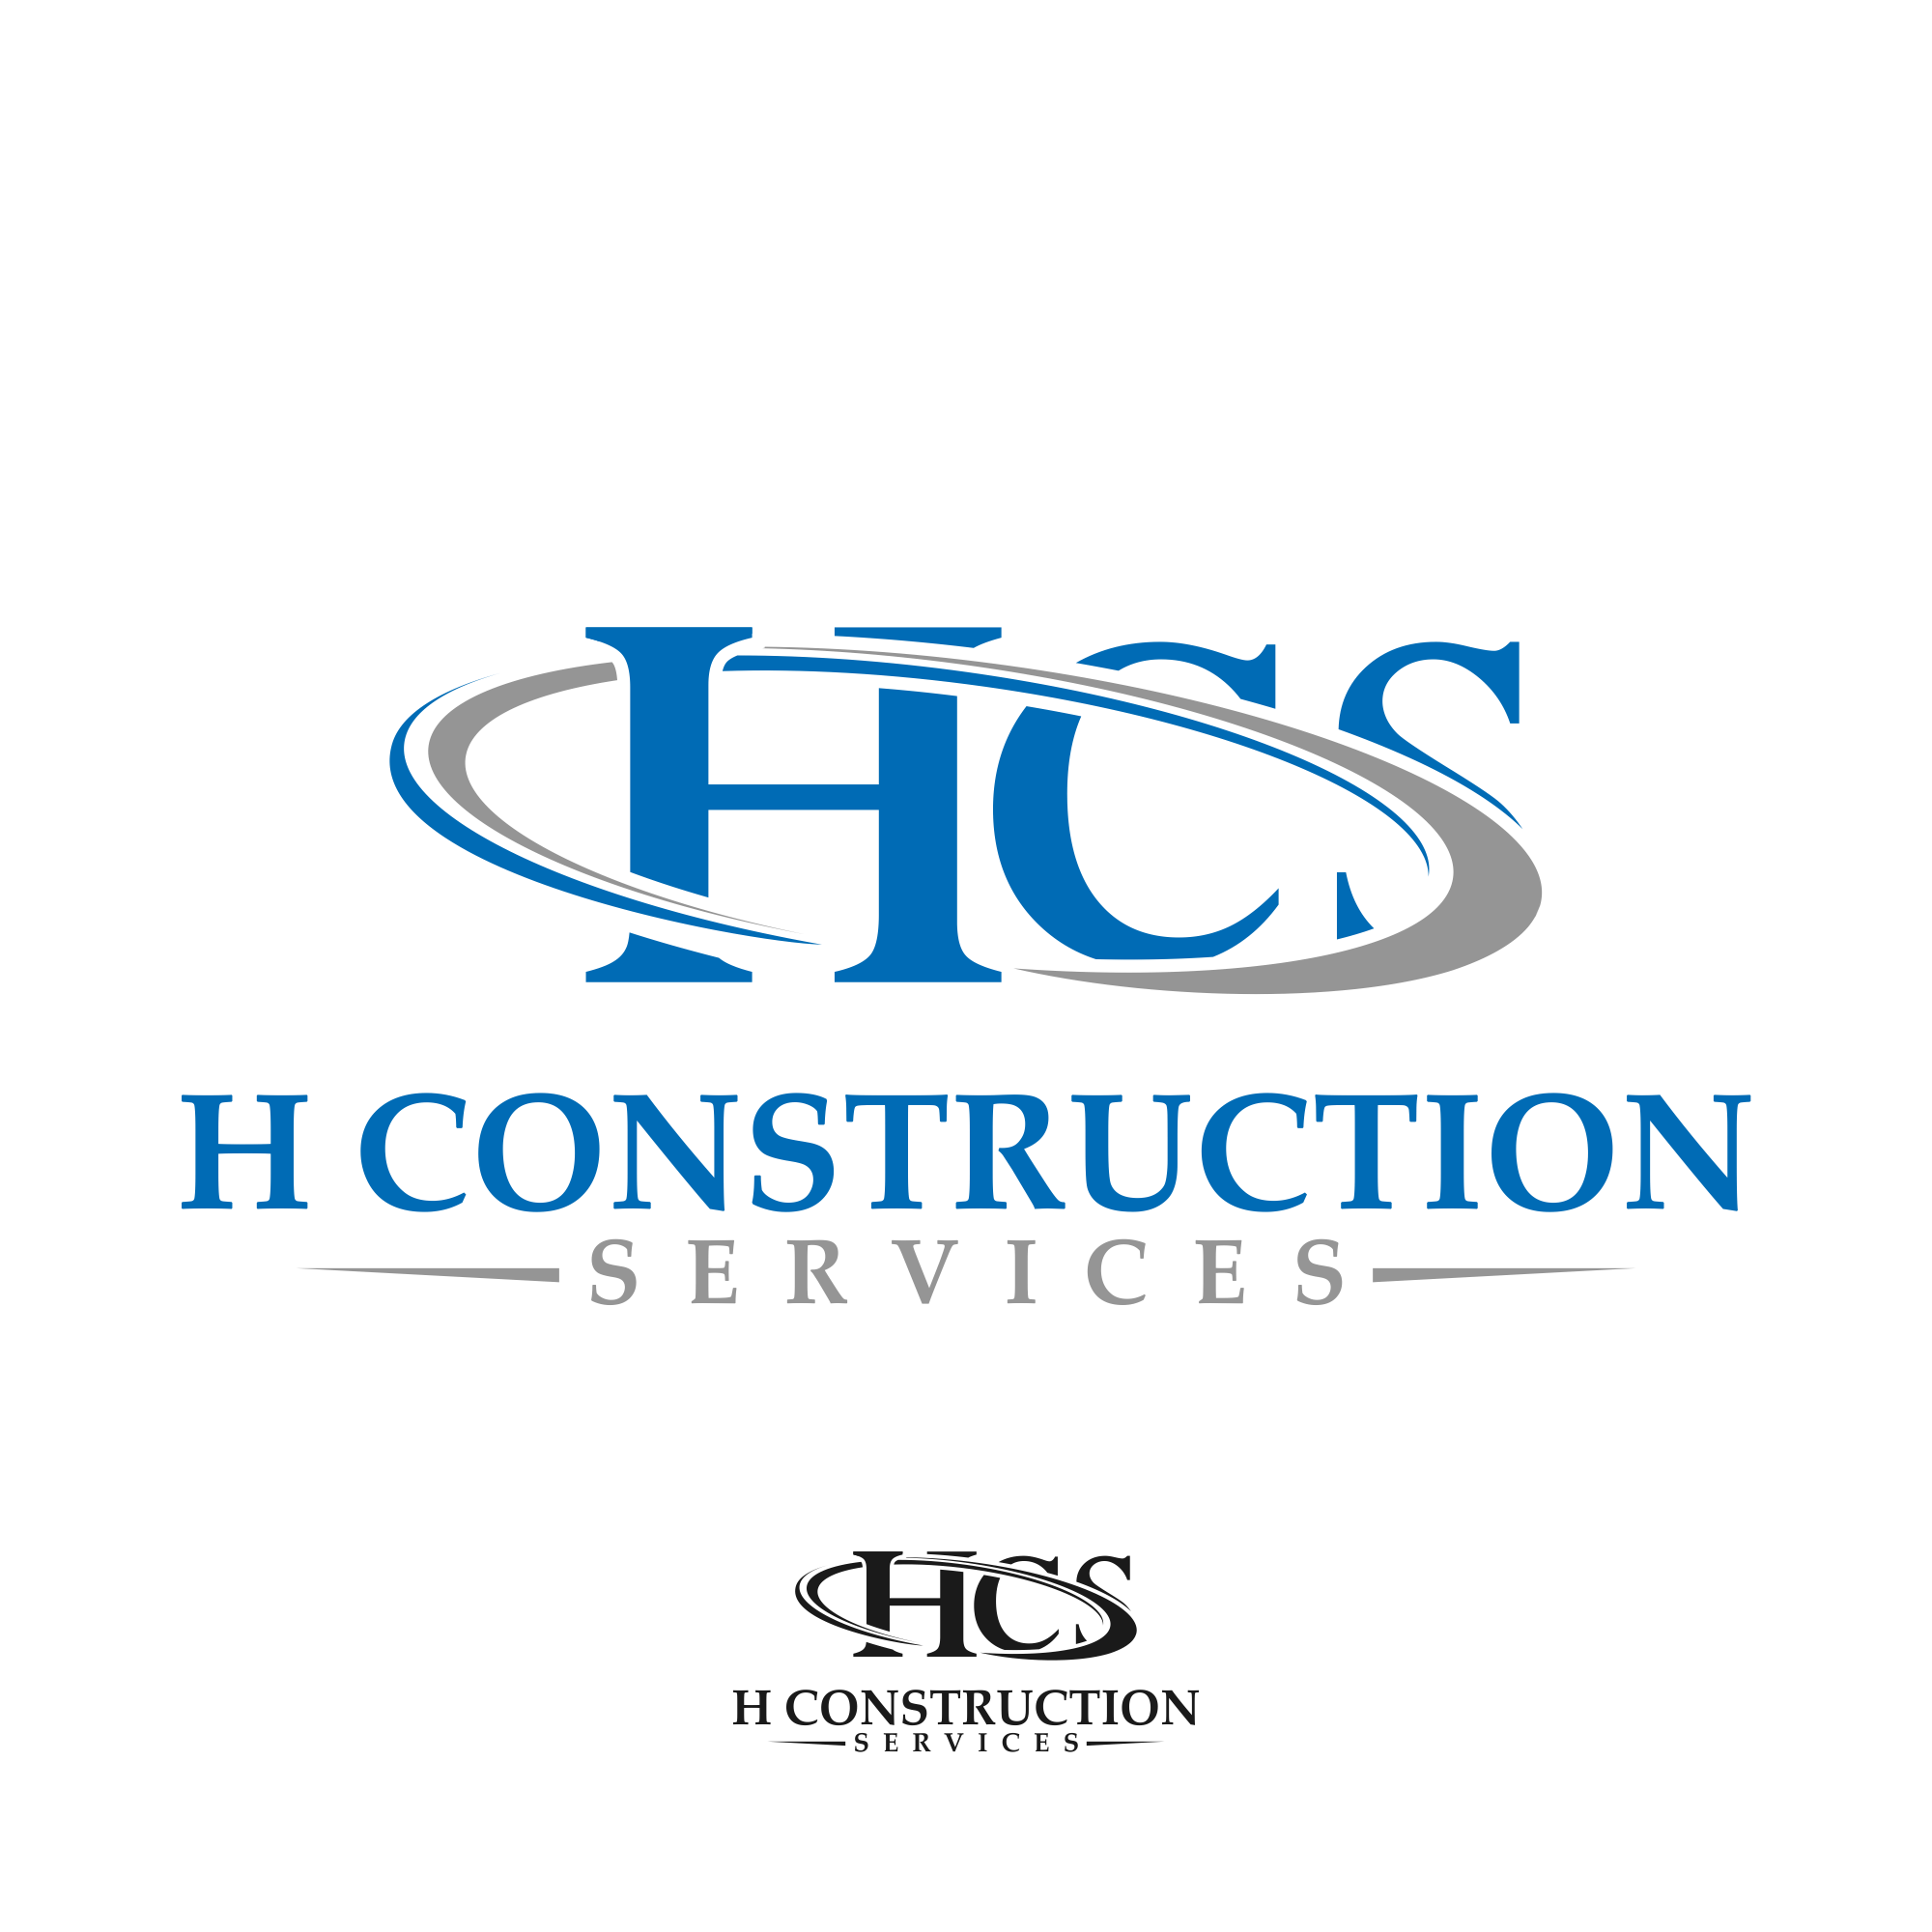 H Construction Logo - DesignContest Construction Services H Construction Services